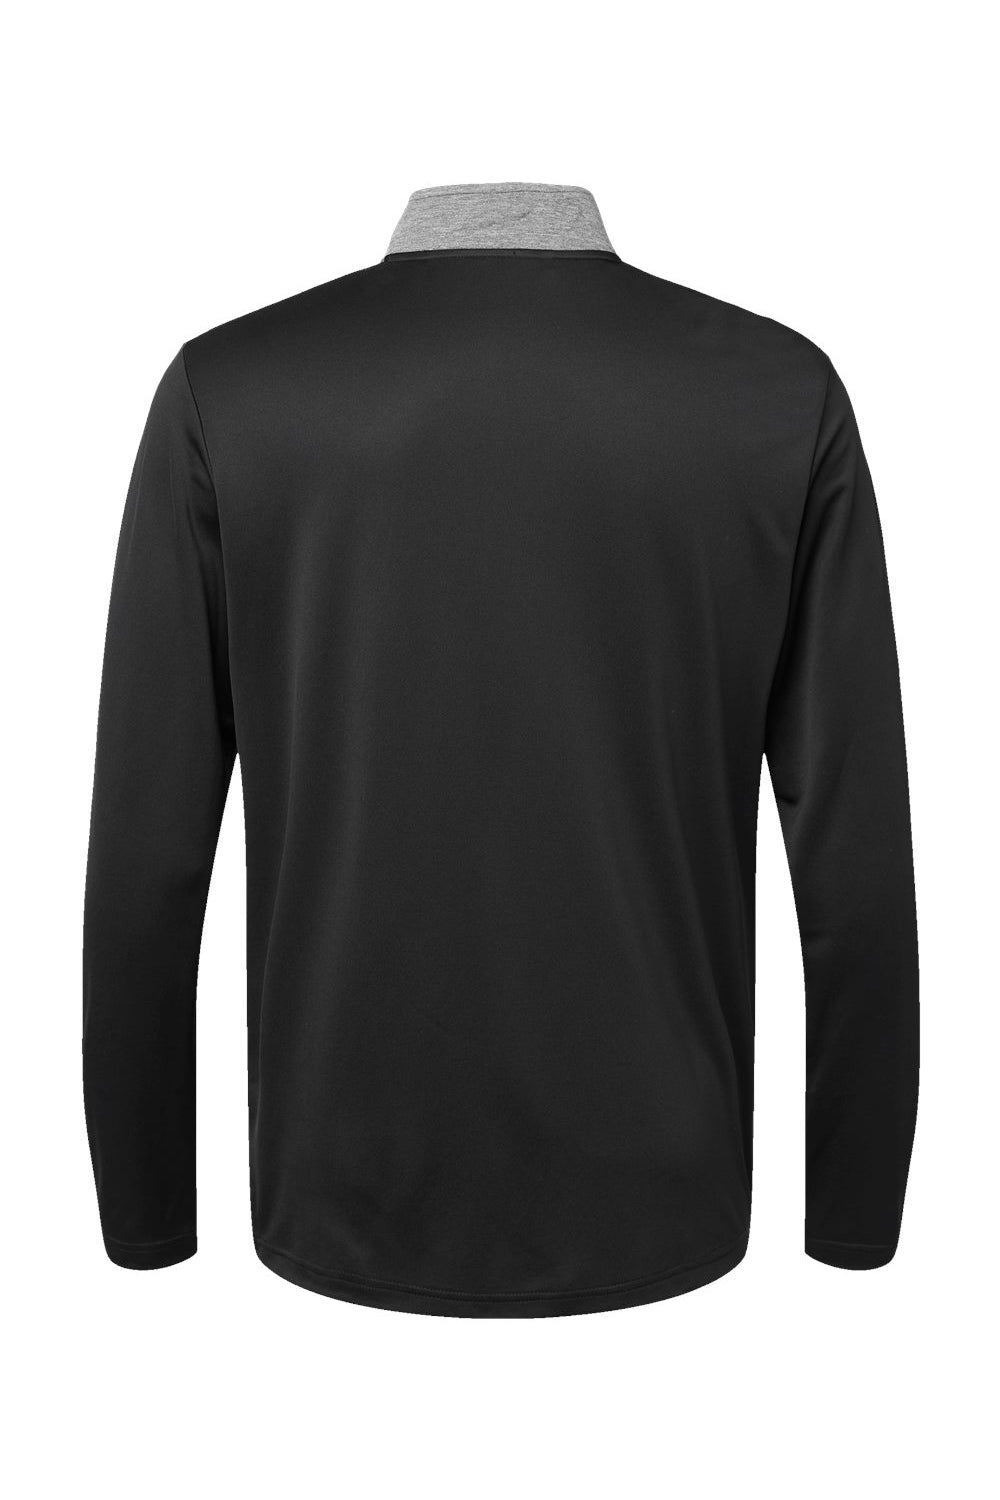 Adidas A522 Mens Heather Block Print Moisture Wicking 1/4 Zip Sweatshirt Black Melange/Black/Grey Flat Back